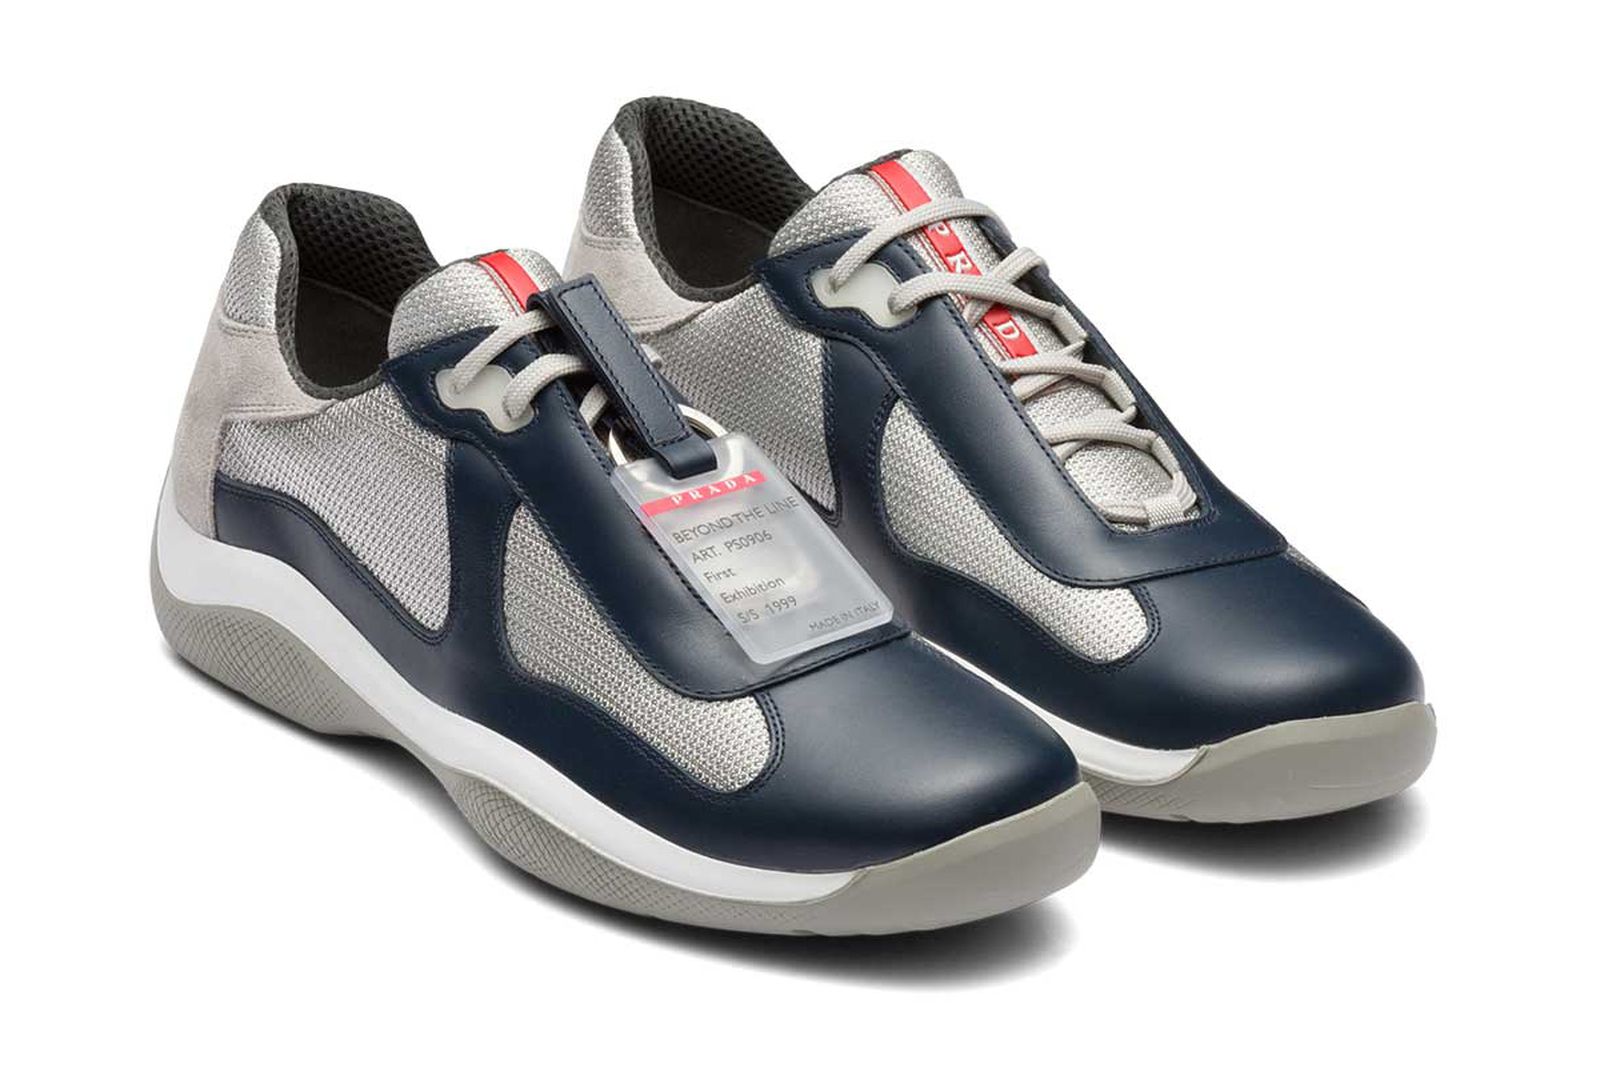 Prada's America's Cup Sneaker Original Colorways, Velcro